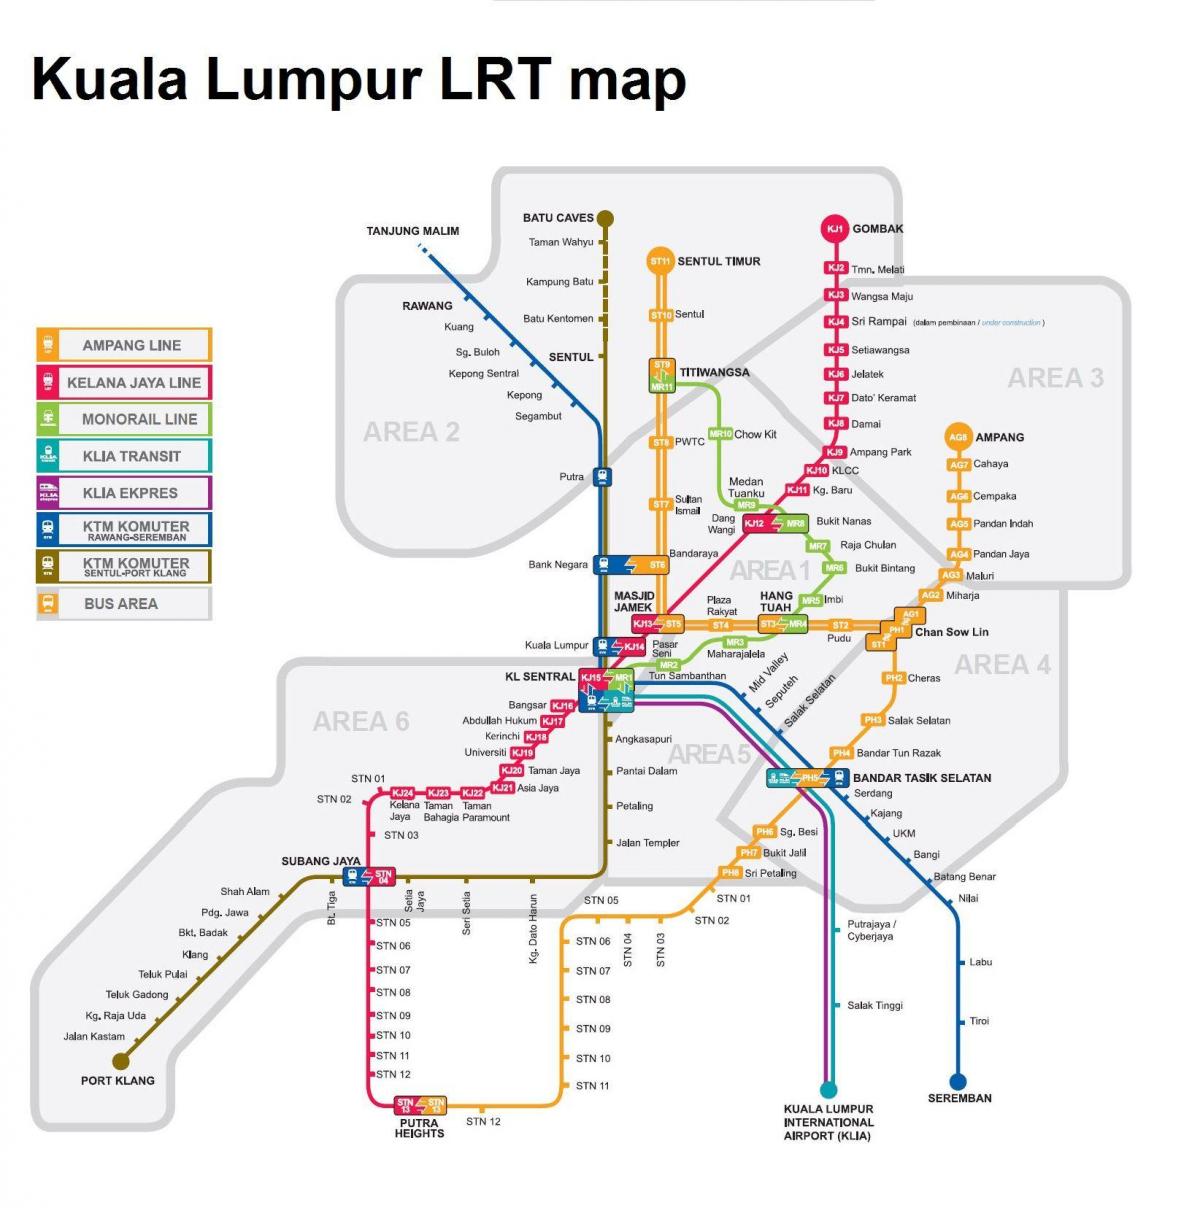 lrt mapu kl malaysia